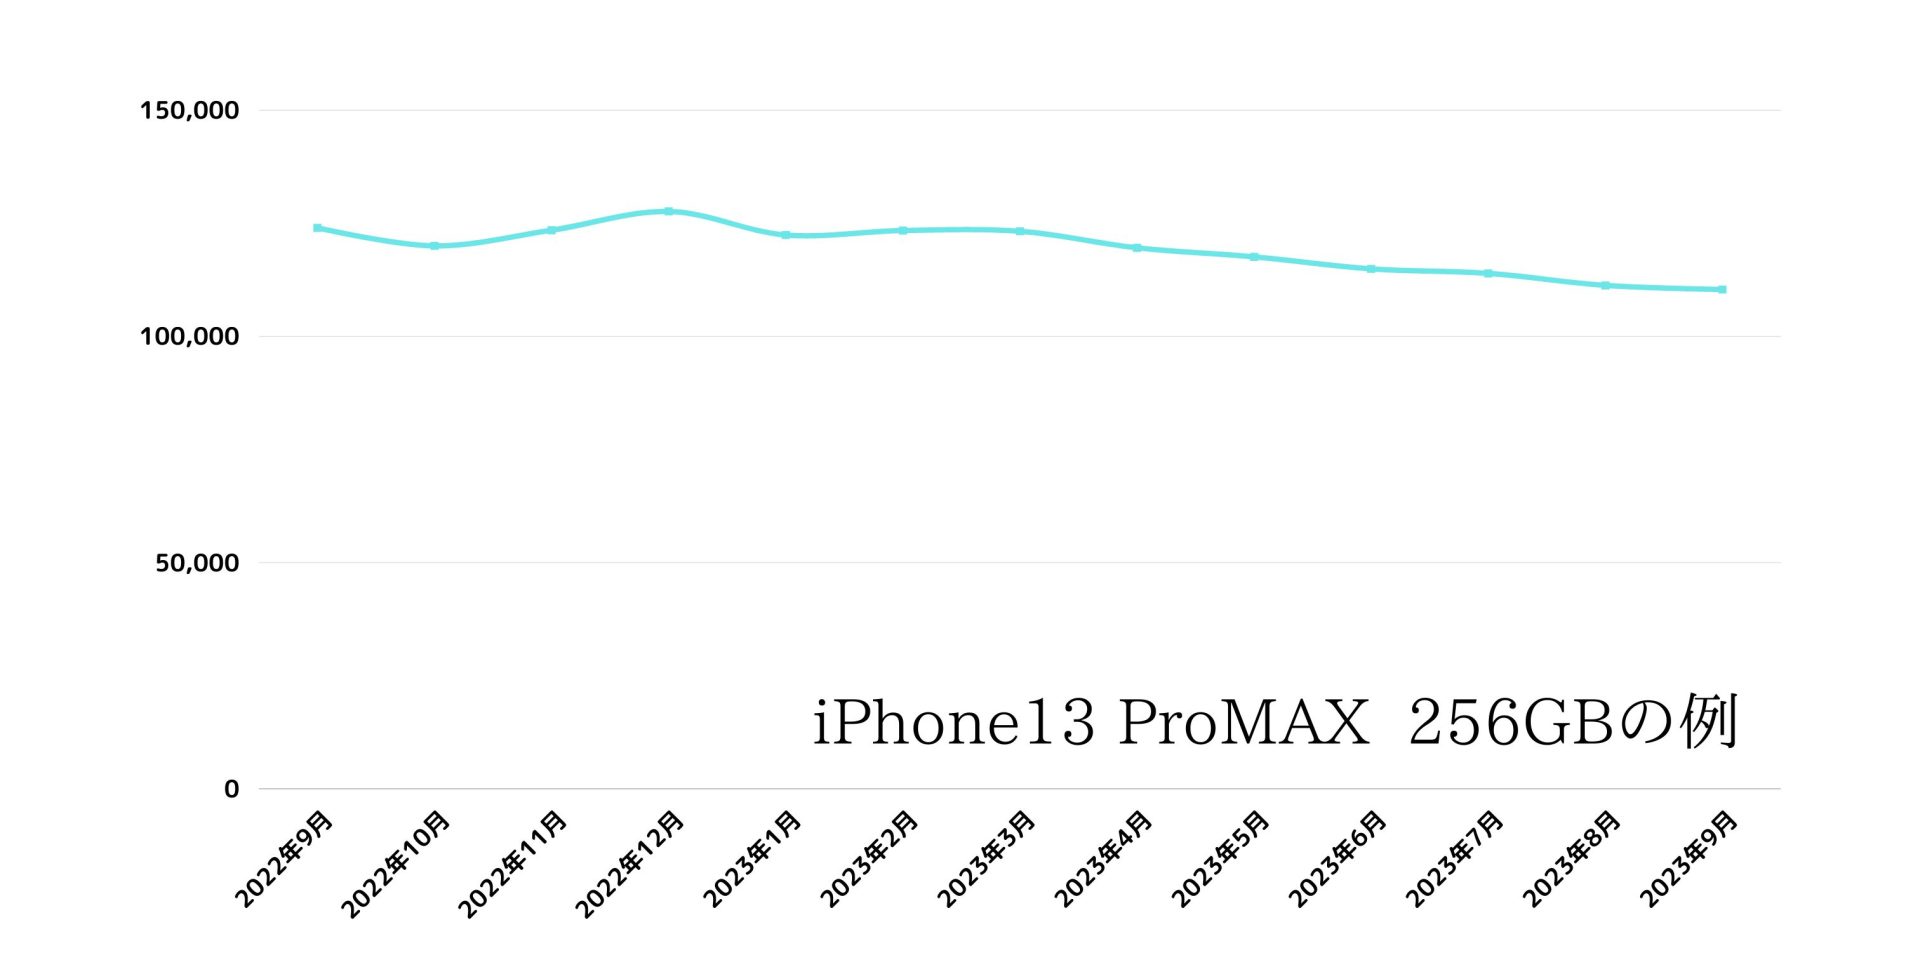 iPhone13 ProMAX 256GB買取価格推移